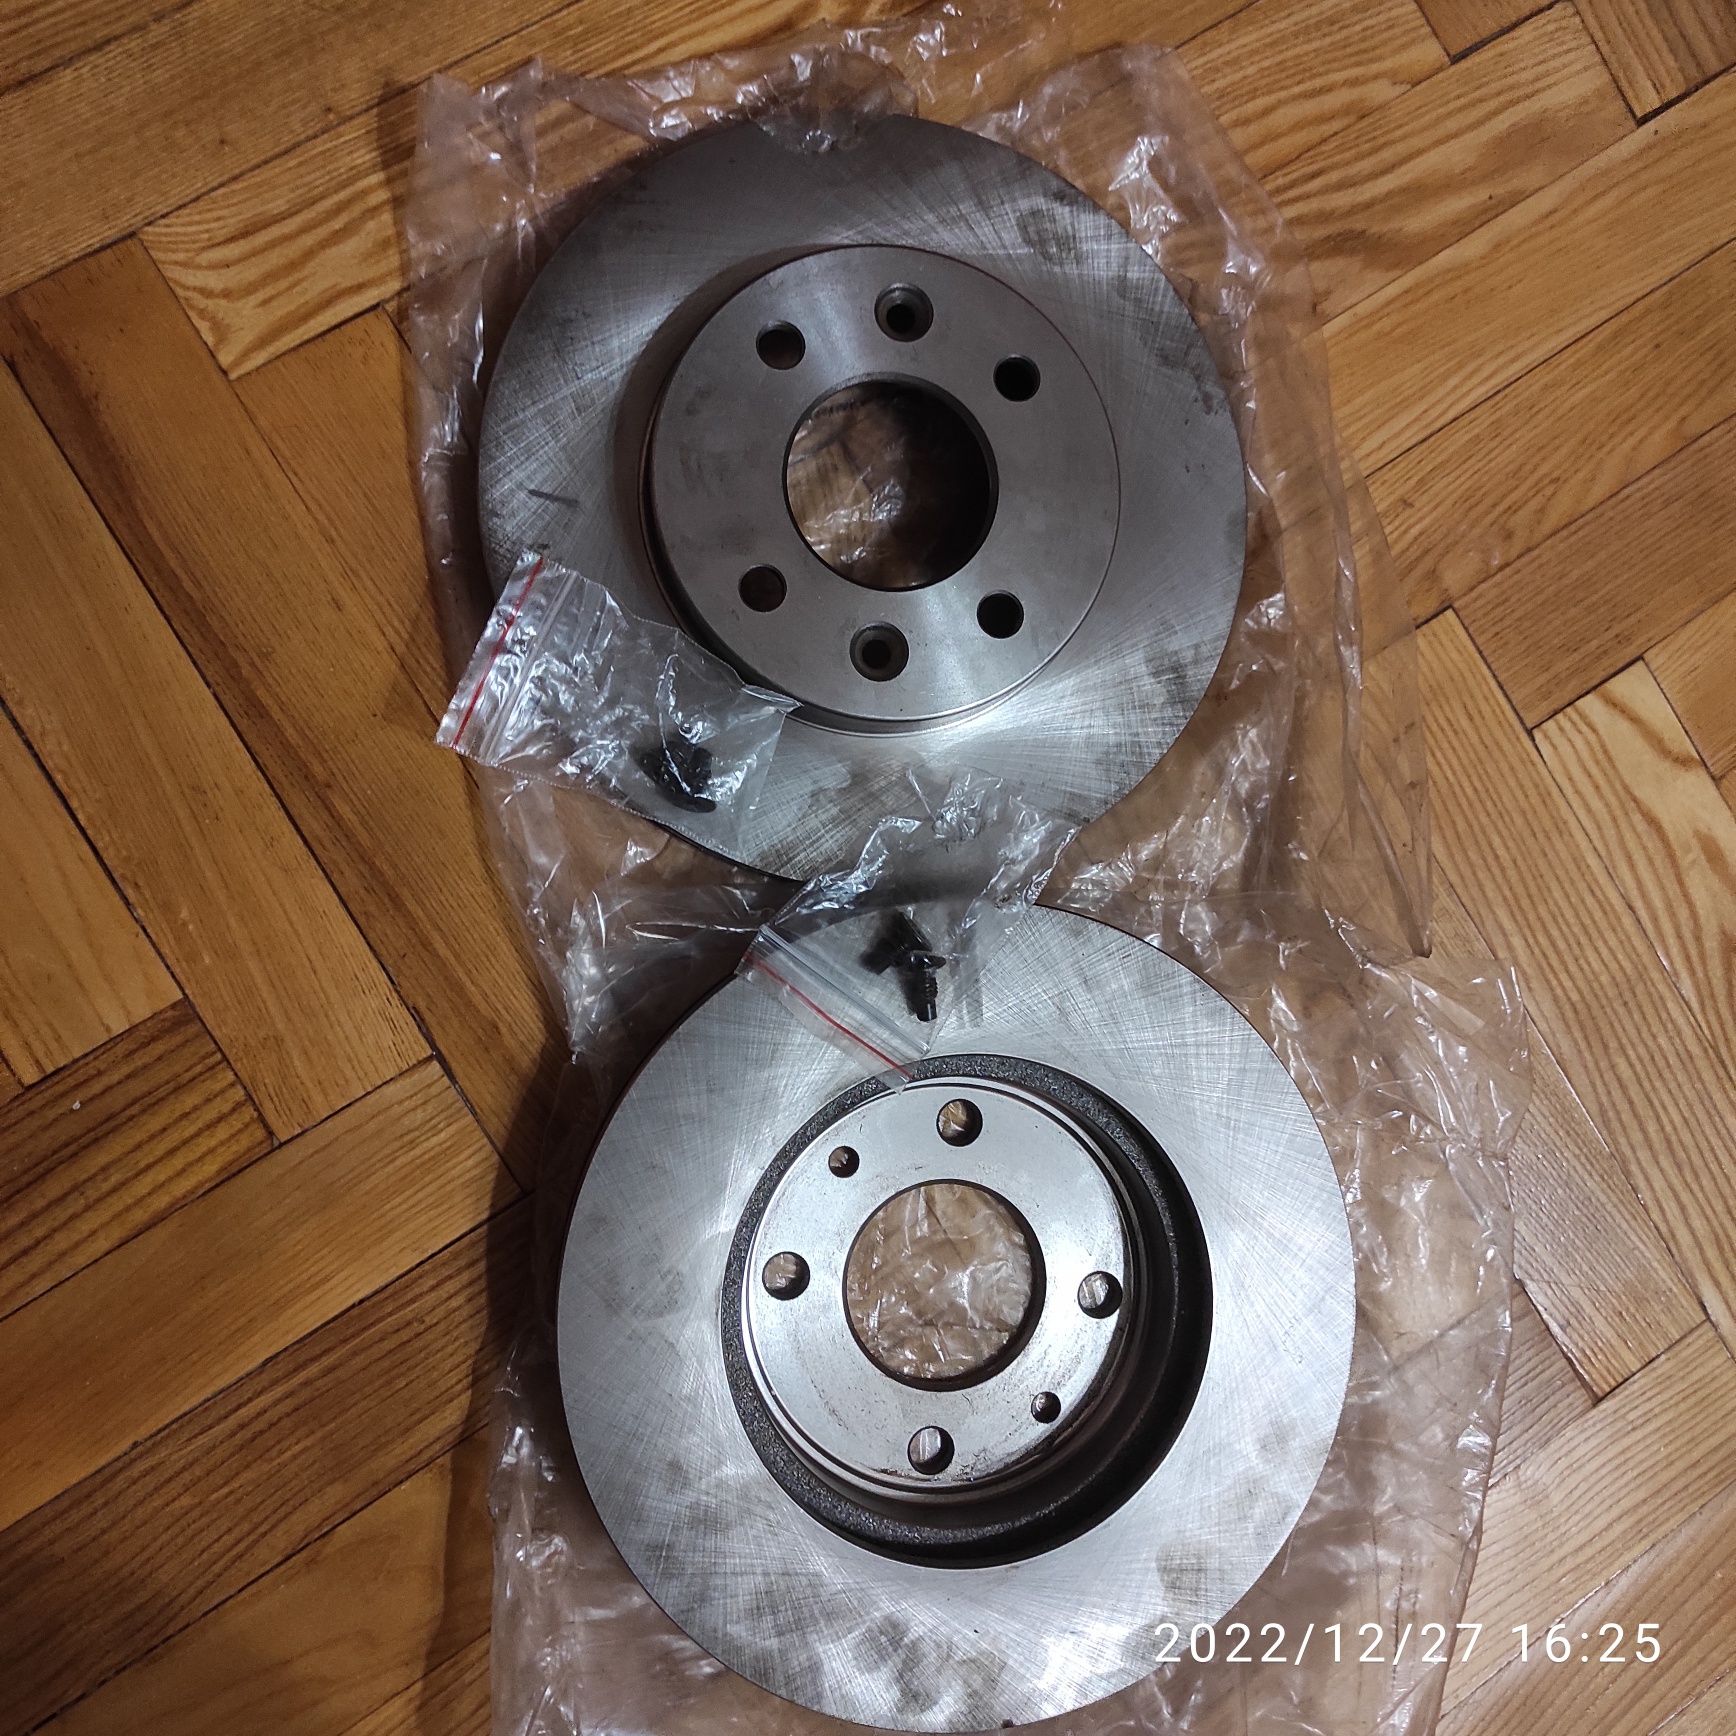 Тормозные диски передние - FERODO
E4 90 R-02 C474/2780
Ф 238x20.1mm

N